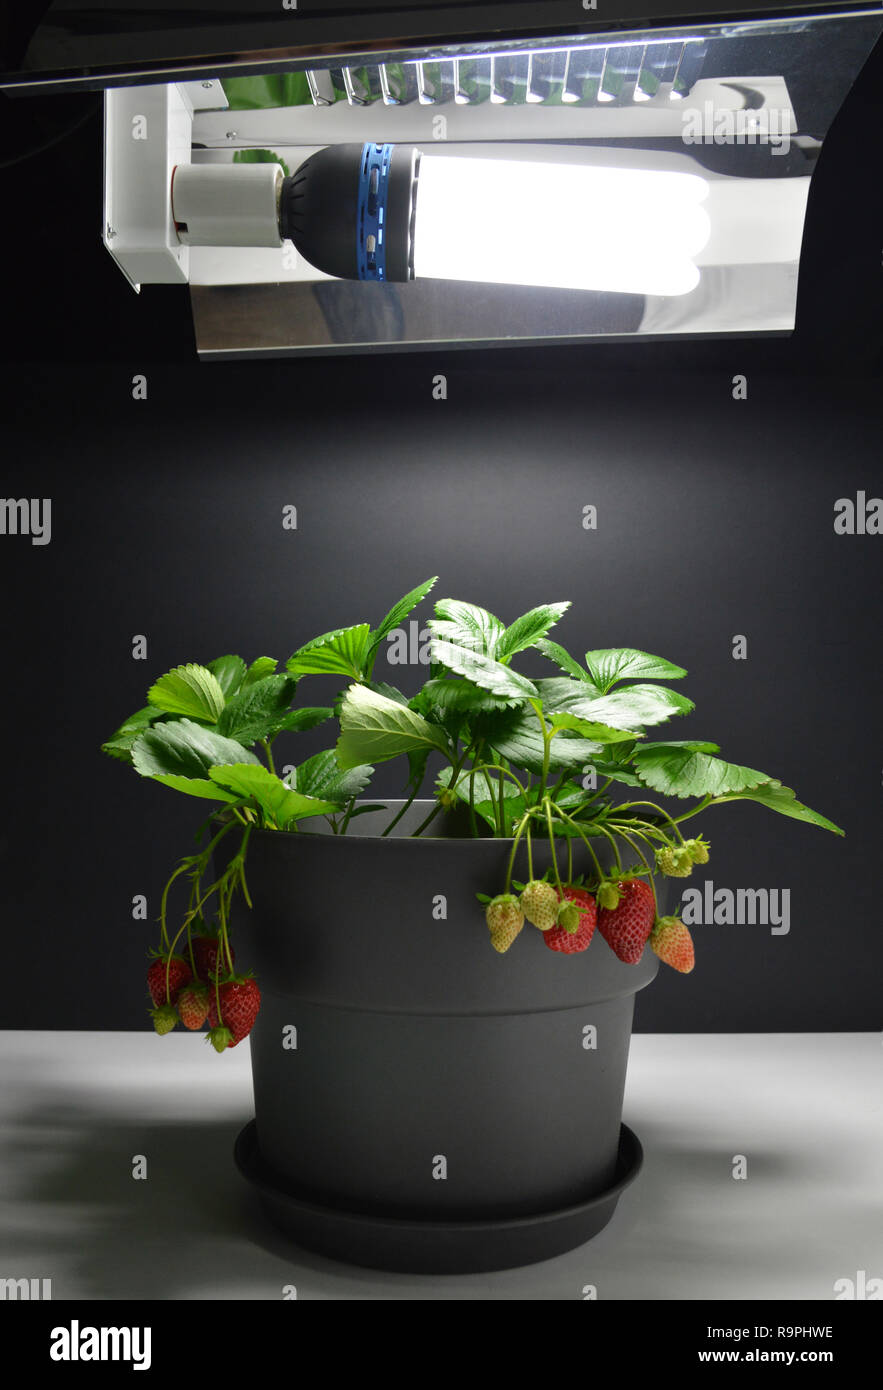 Strawberries plant growing under a growth lamp (artificial light) in indoor gardening or indoor growing. With strawberries. Garden strawberry. Stock Photo